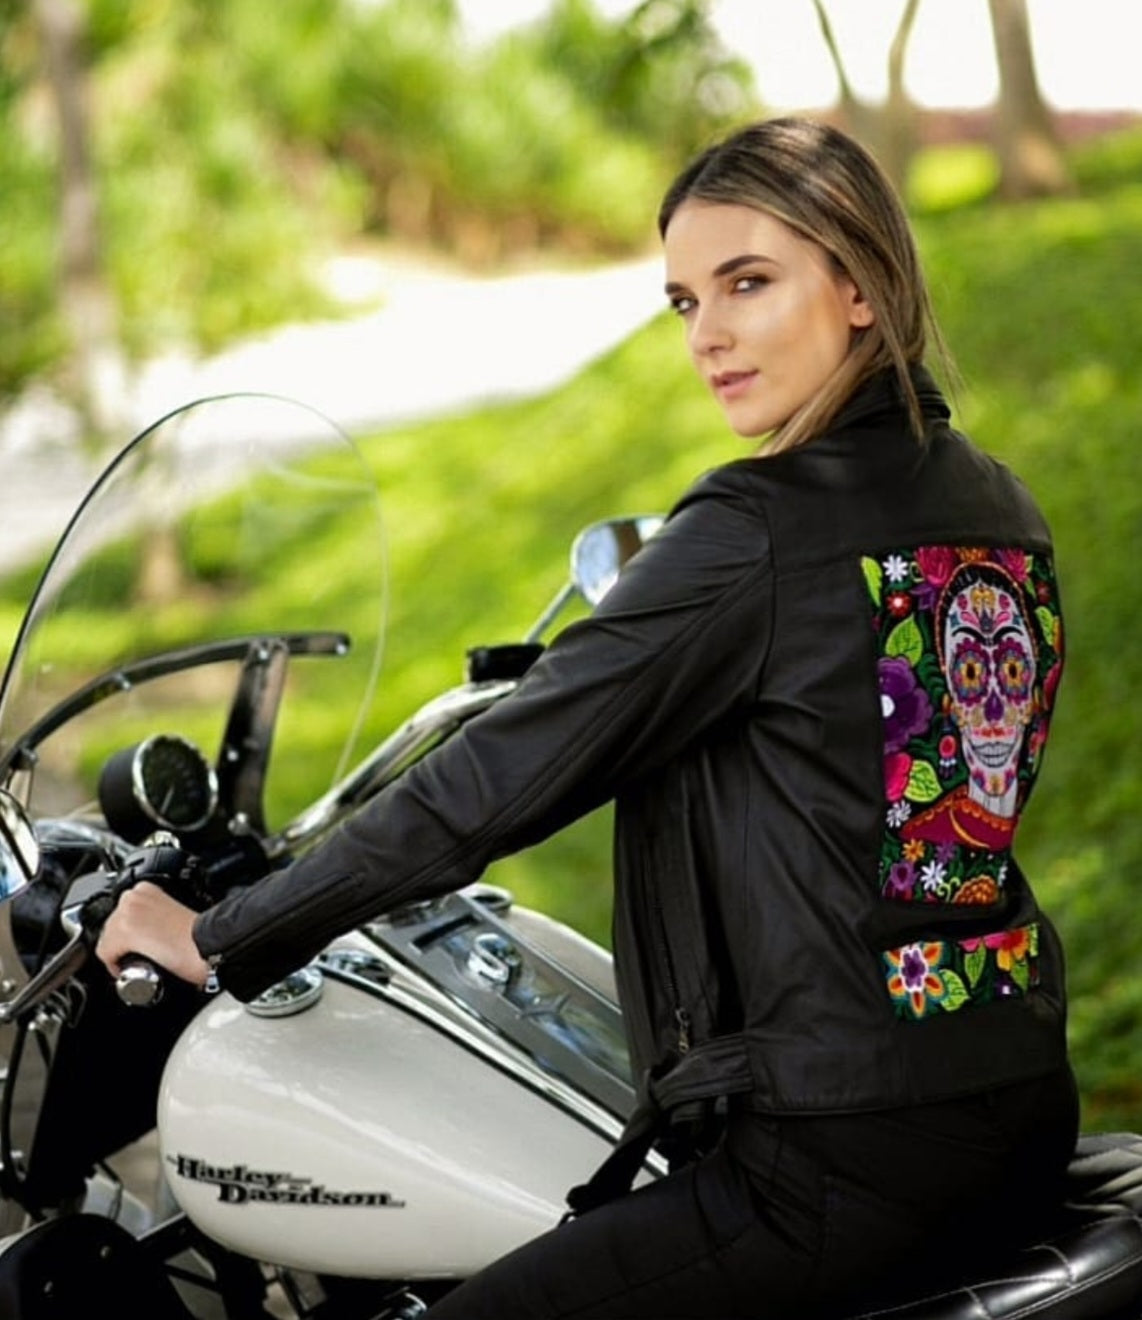 Jacket biker calavera flores